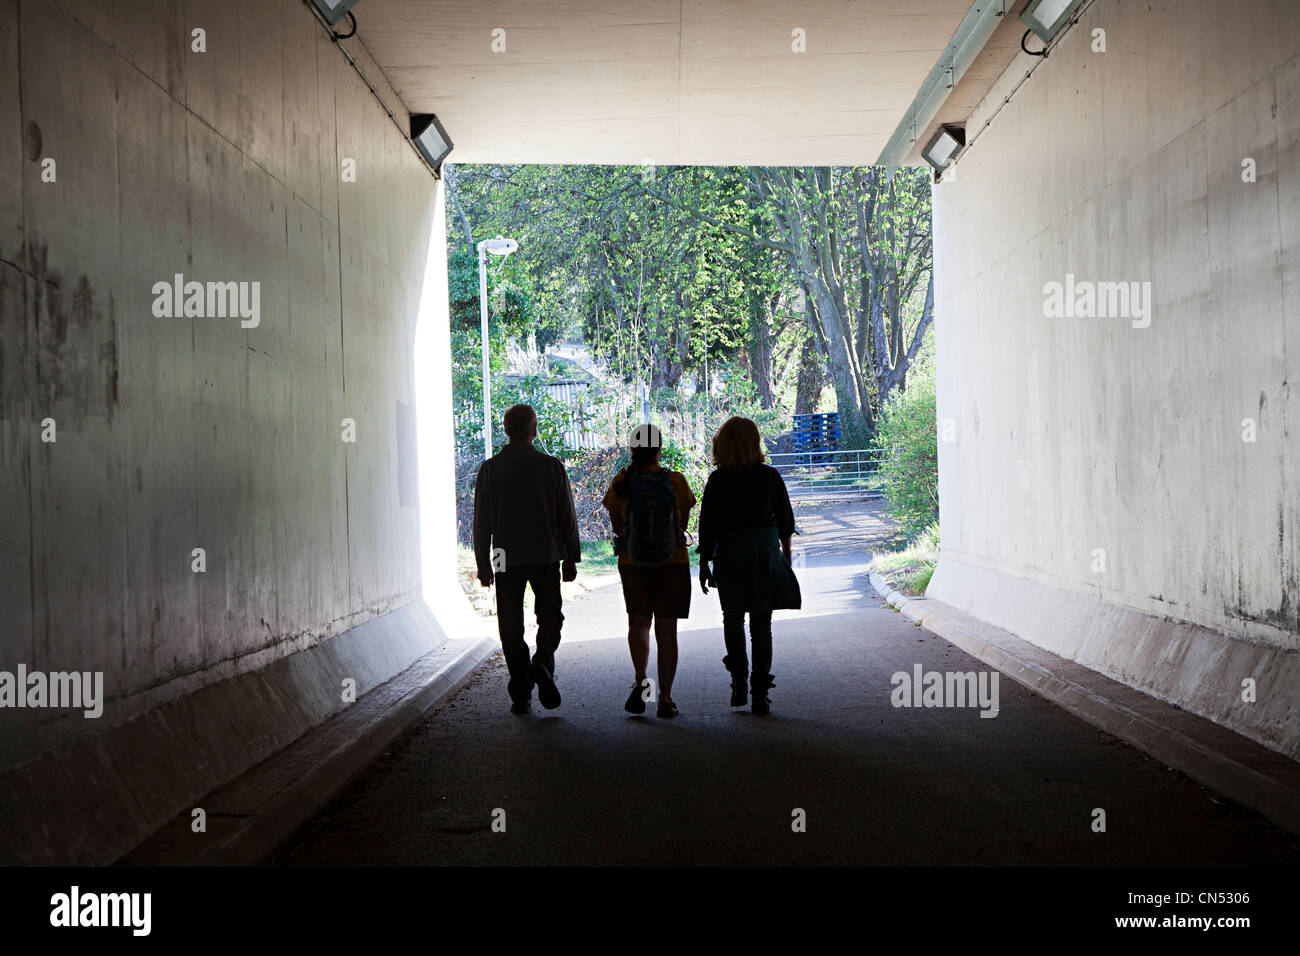 Three people walking through underpass, Abergavenny, Wales, UK Stock Photo